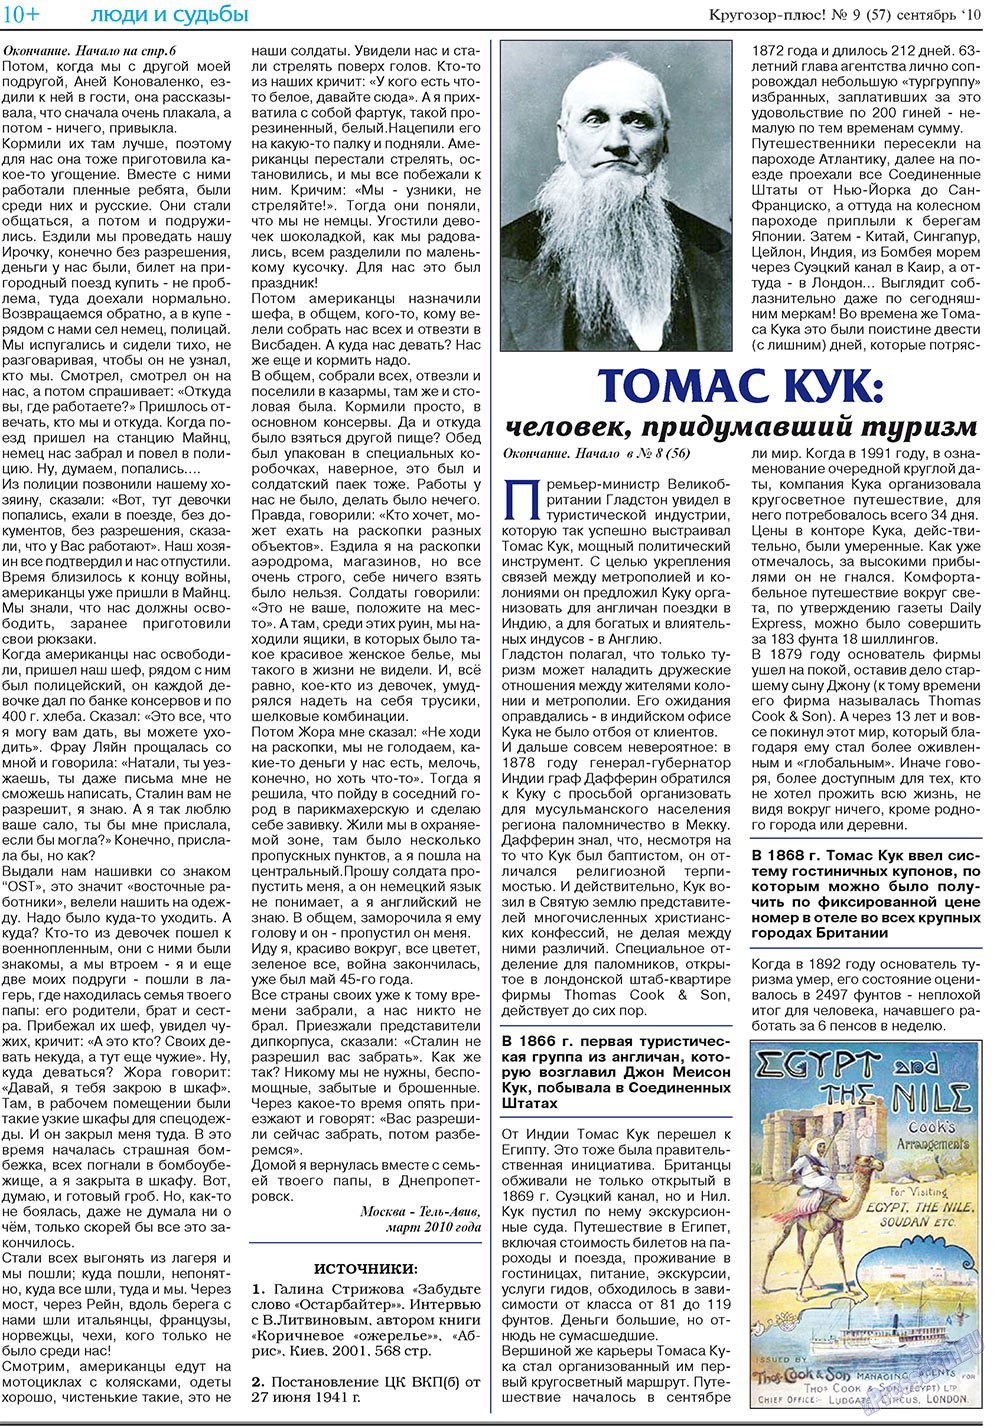 Кругозор плюс! (газета). 2010 год, номер 9, стр. 26